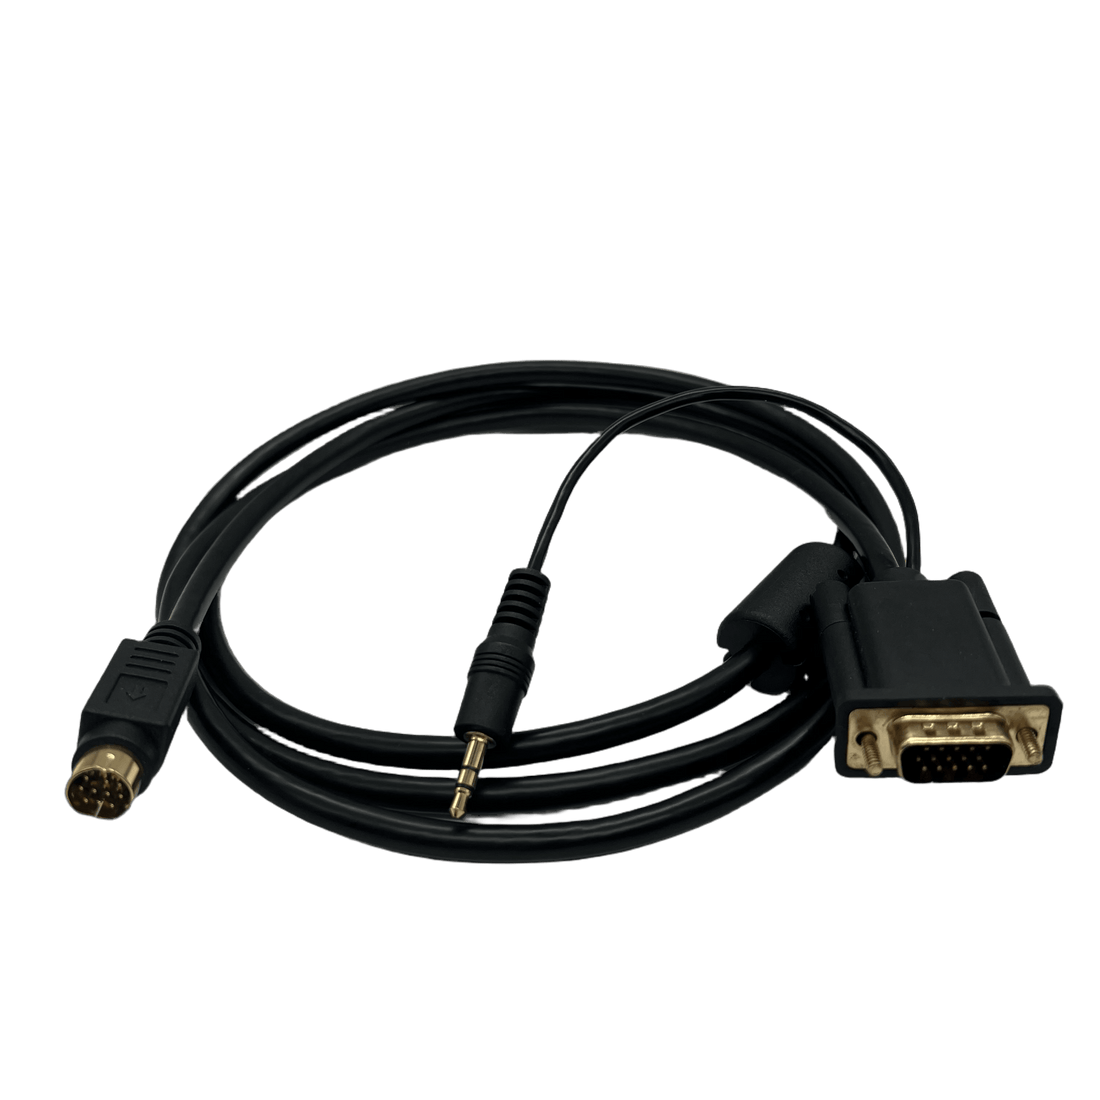 MiSTer (Mini-DIN-10) Premium HD15/VGA Video Cable - MiSTer Addons